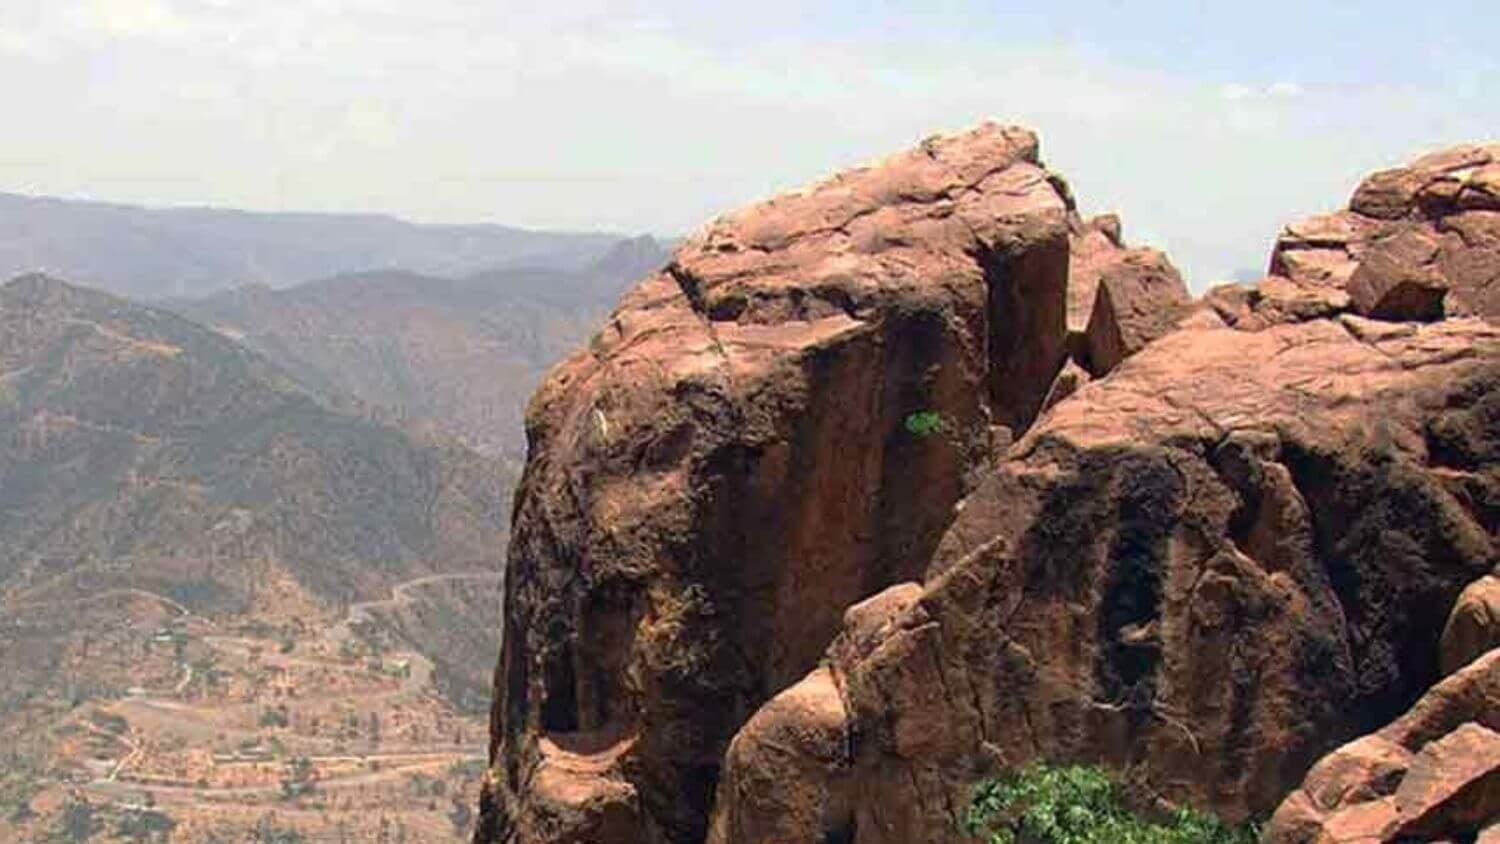 One of the Beautiful mountain in Eritrea edited 1